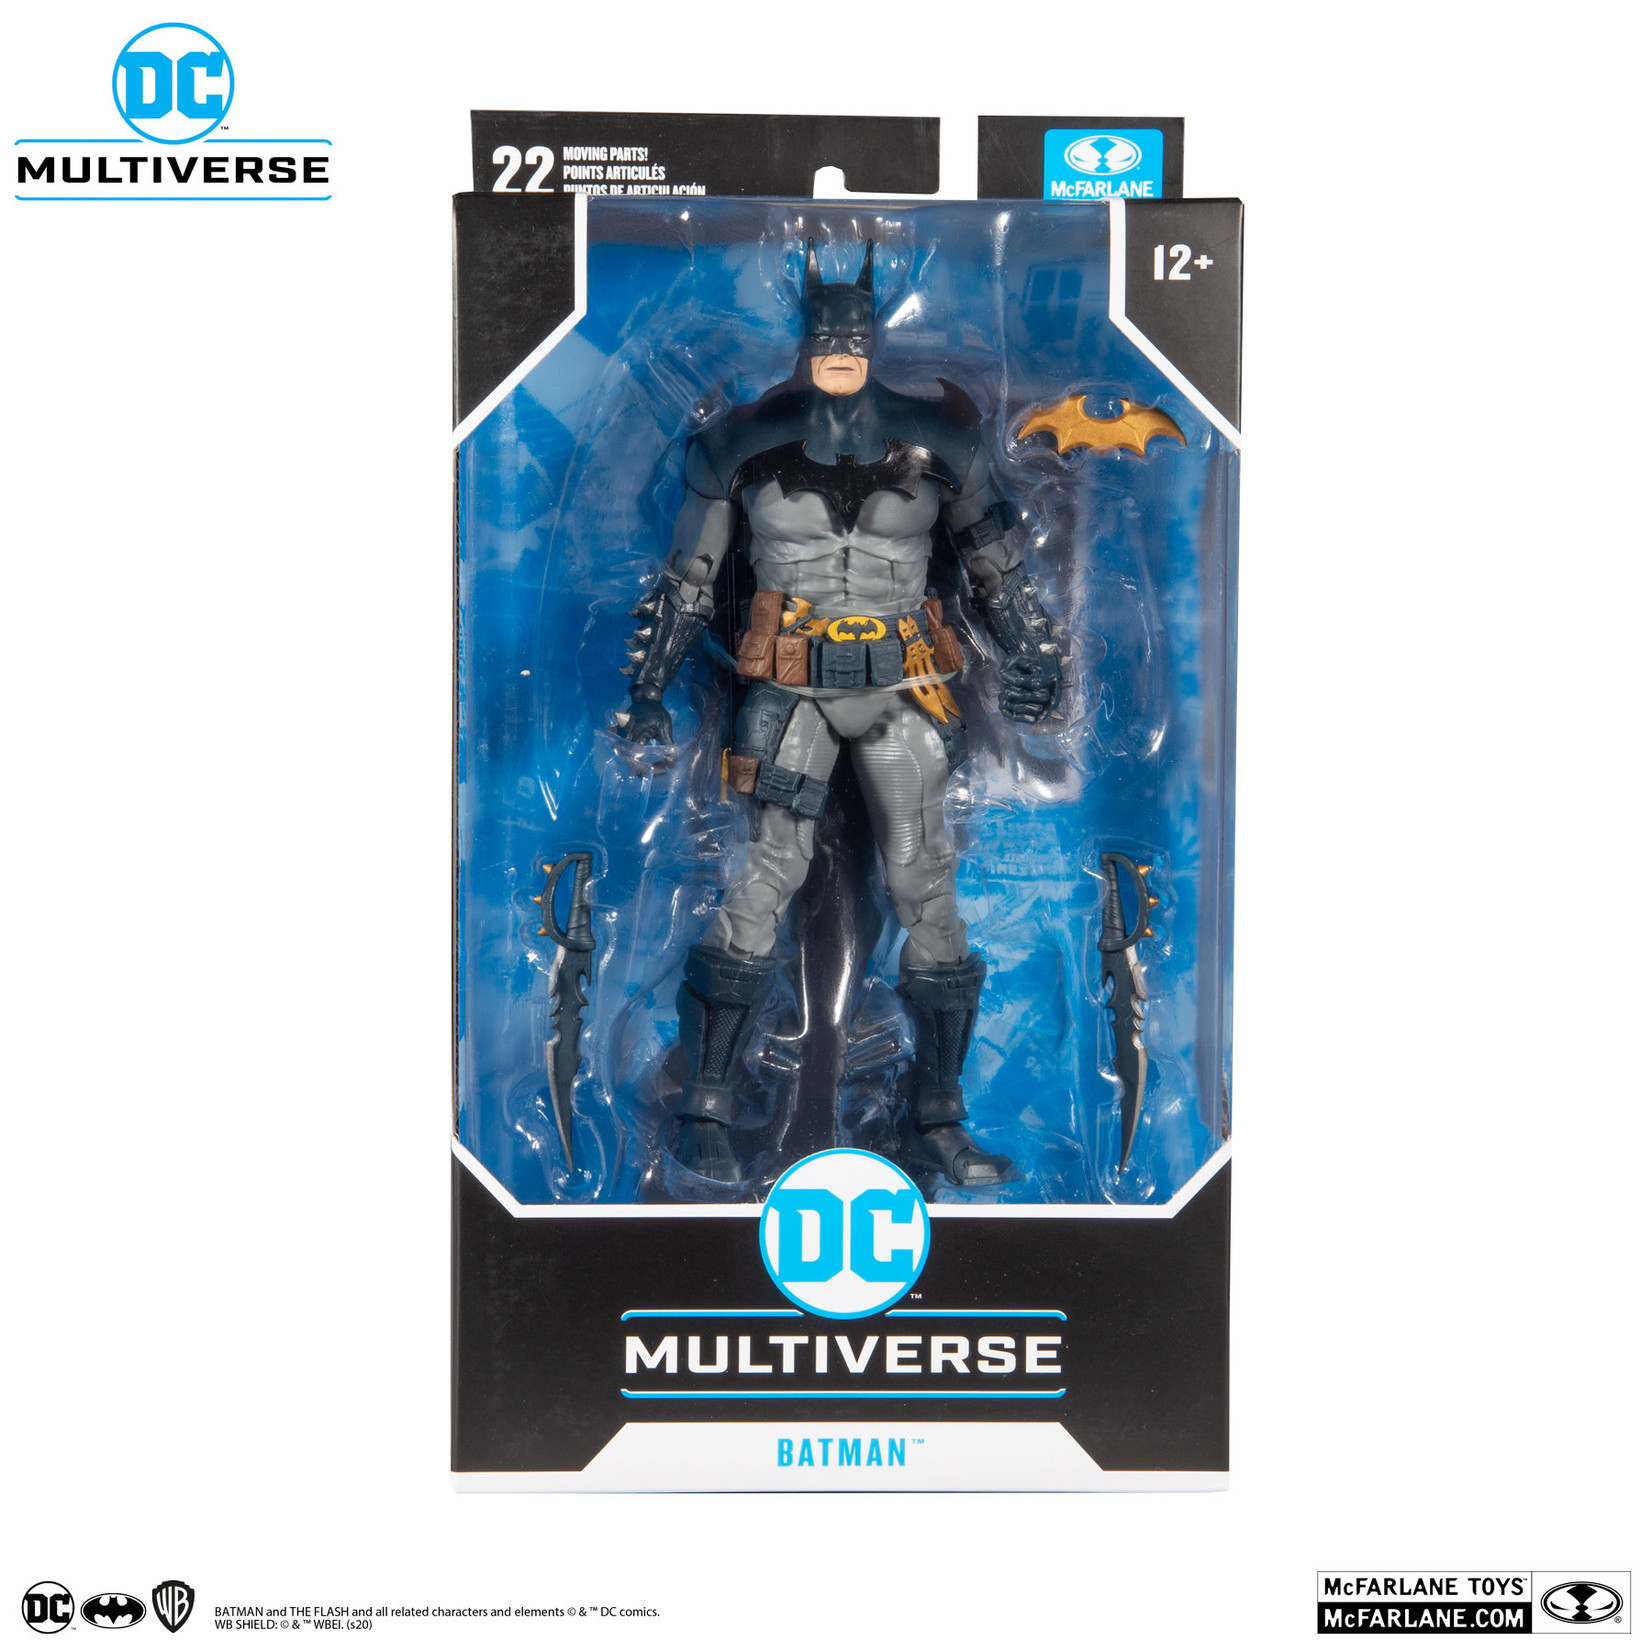 McFarlane Toys DC MULTIVERSE BATMAN DESIGNED BY TODD MCFARLANE